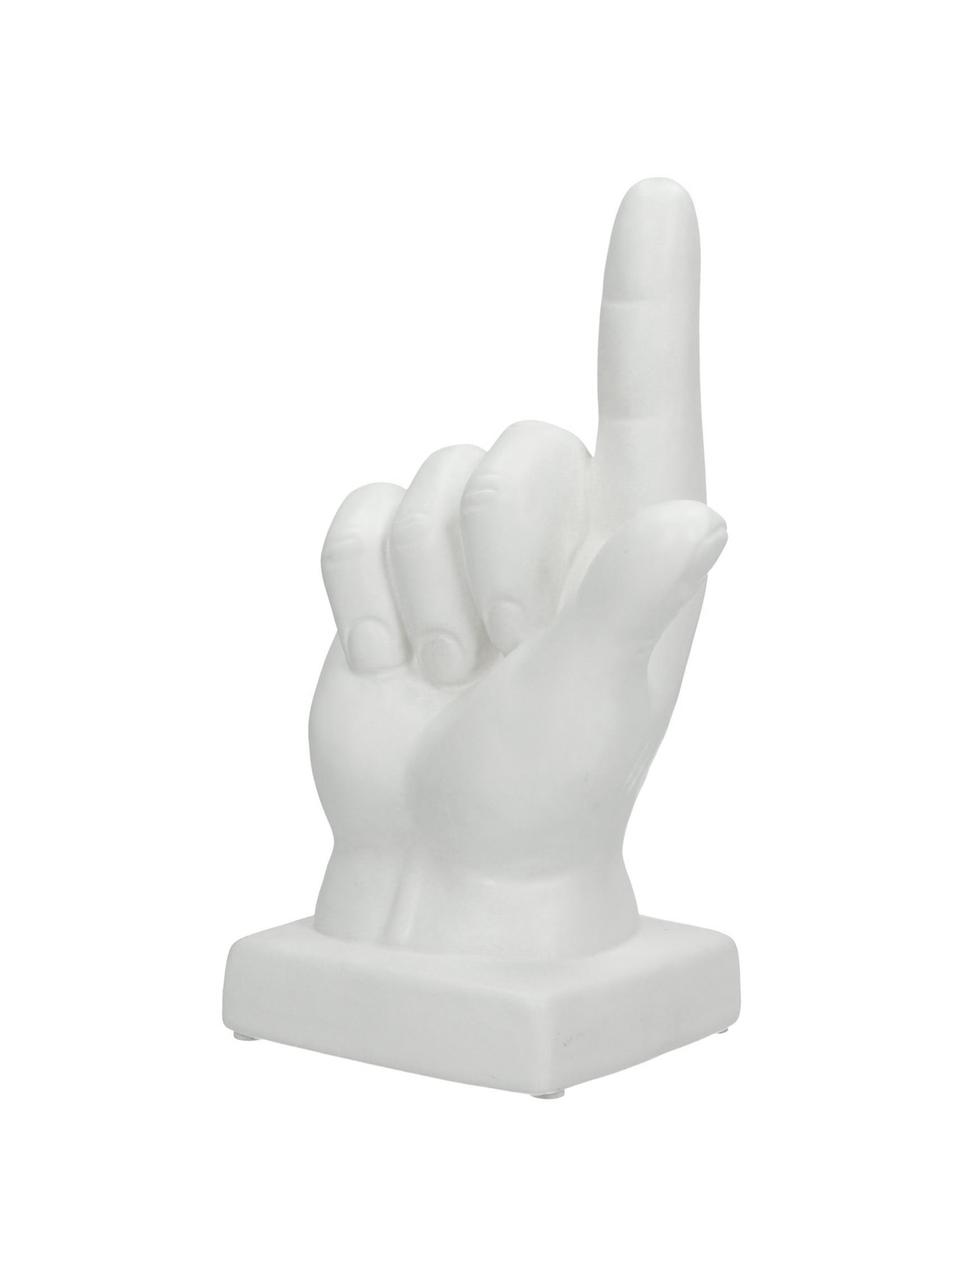 Dekorace Finger, Kamenina, Bílá, Š 13 cm, V 20 cm